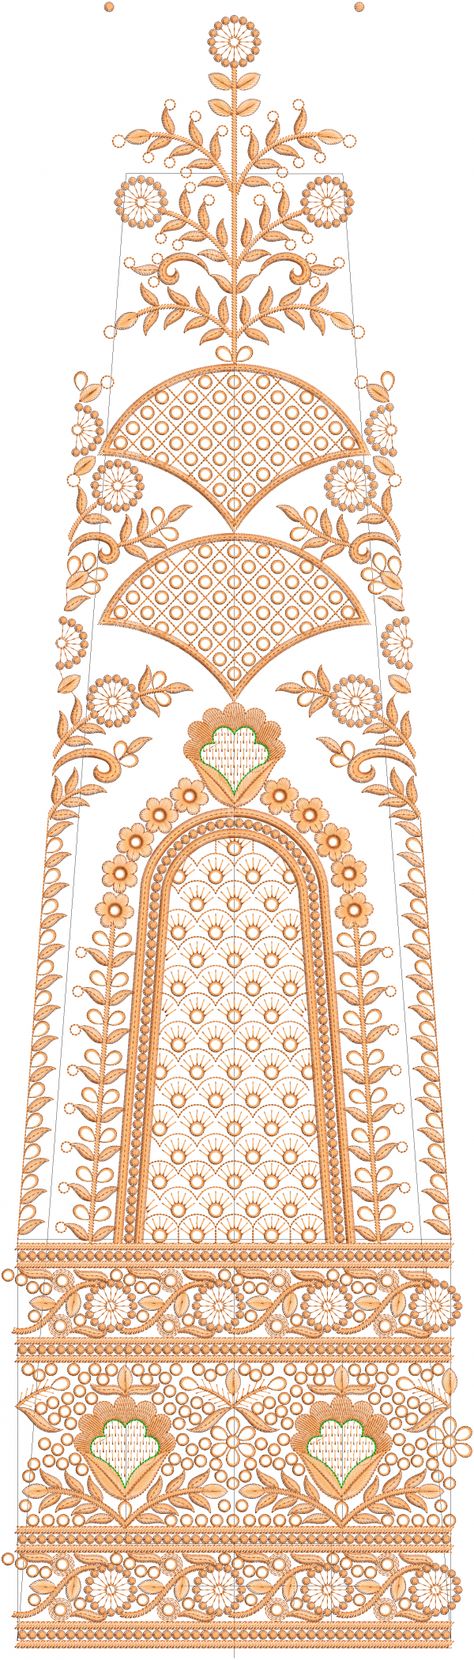 rajasthani lehenga embroidery design Rajasthani Embroidery, Lehenga Embroidery Design, Rajasthani Lehenga, Lehenga Embroidery, Harry Potter Illustrations, Baby Clip Art, Lehenga Designs, Credit Card Debit, Inspired Dress